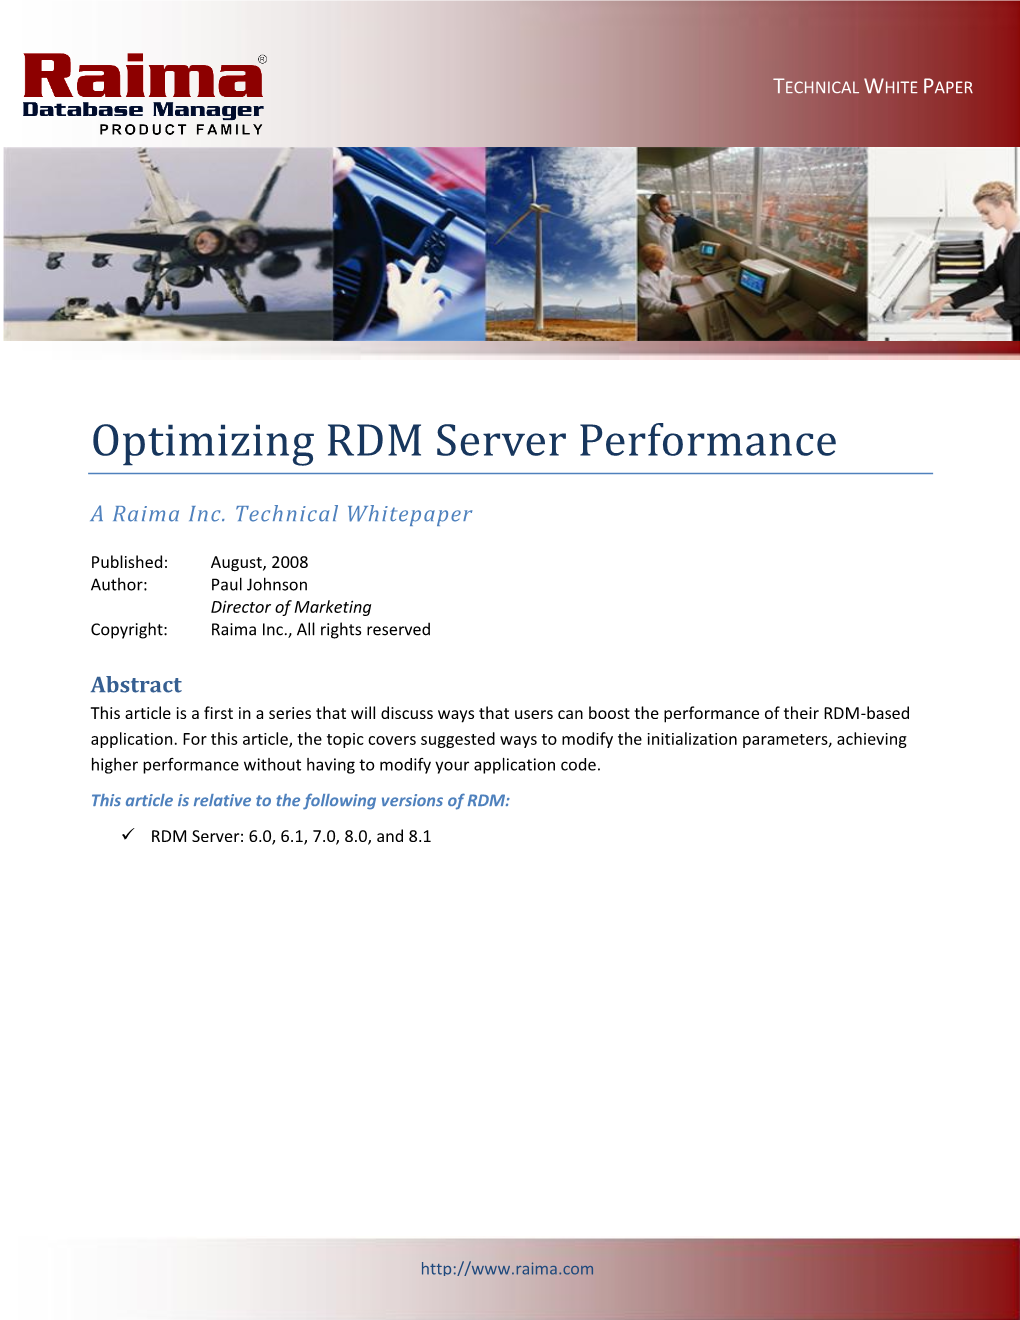 Optimizing RDM Server Performance